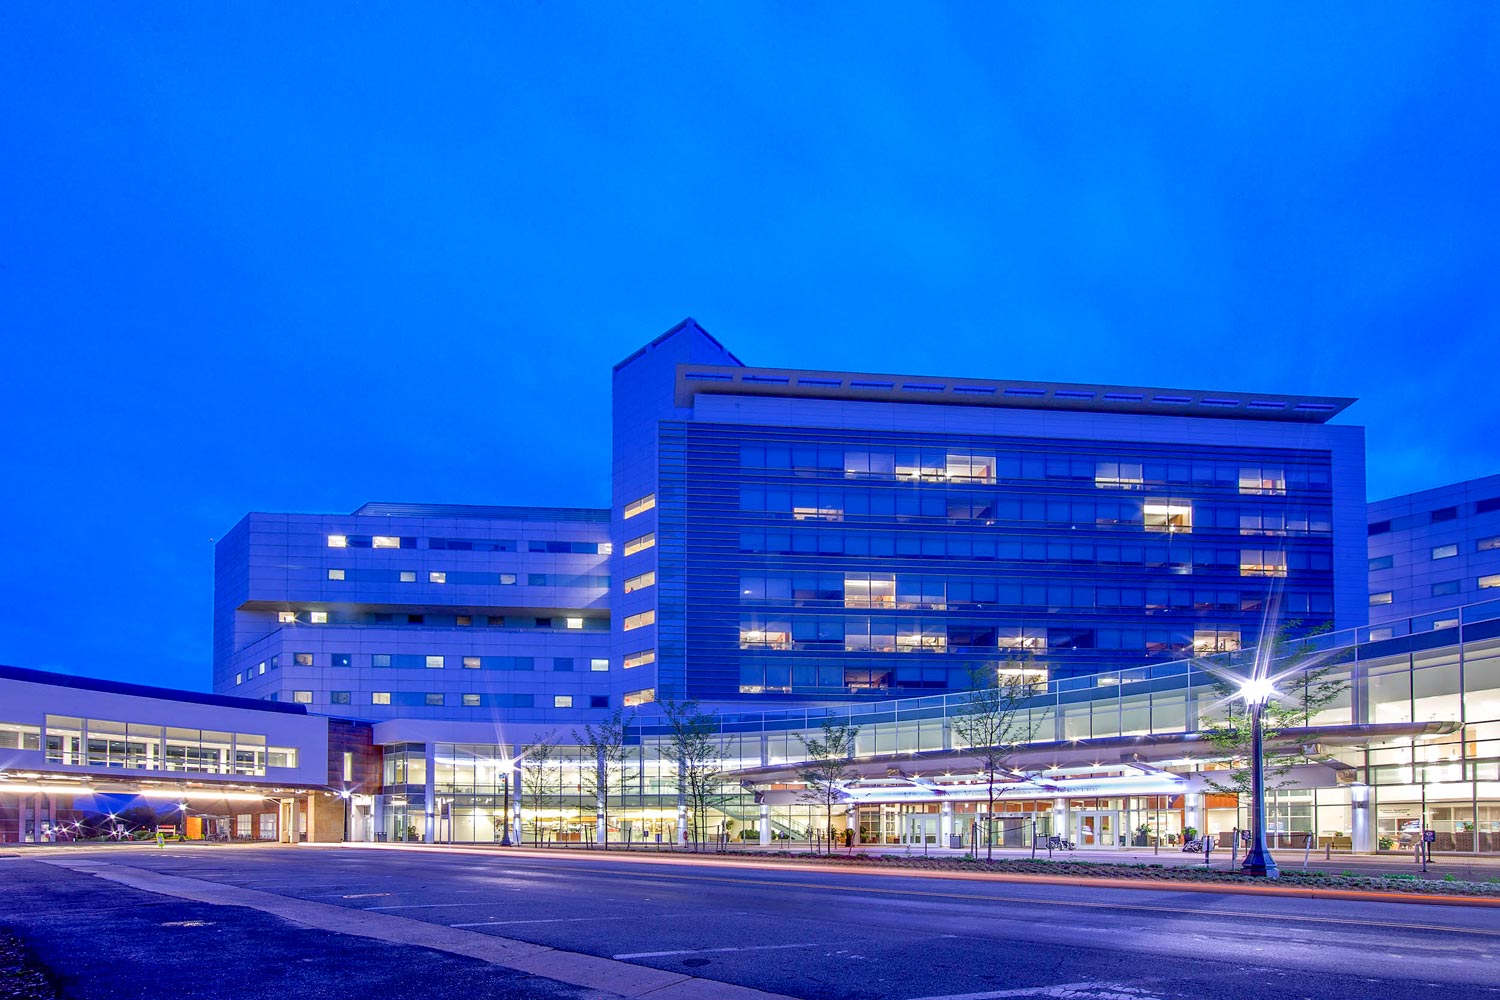 UVA hospital entrance at dusk with lights on